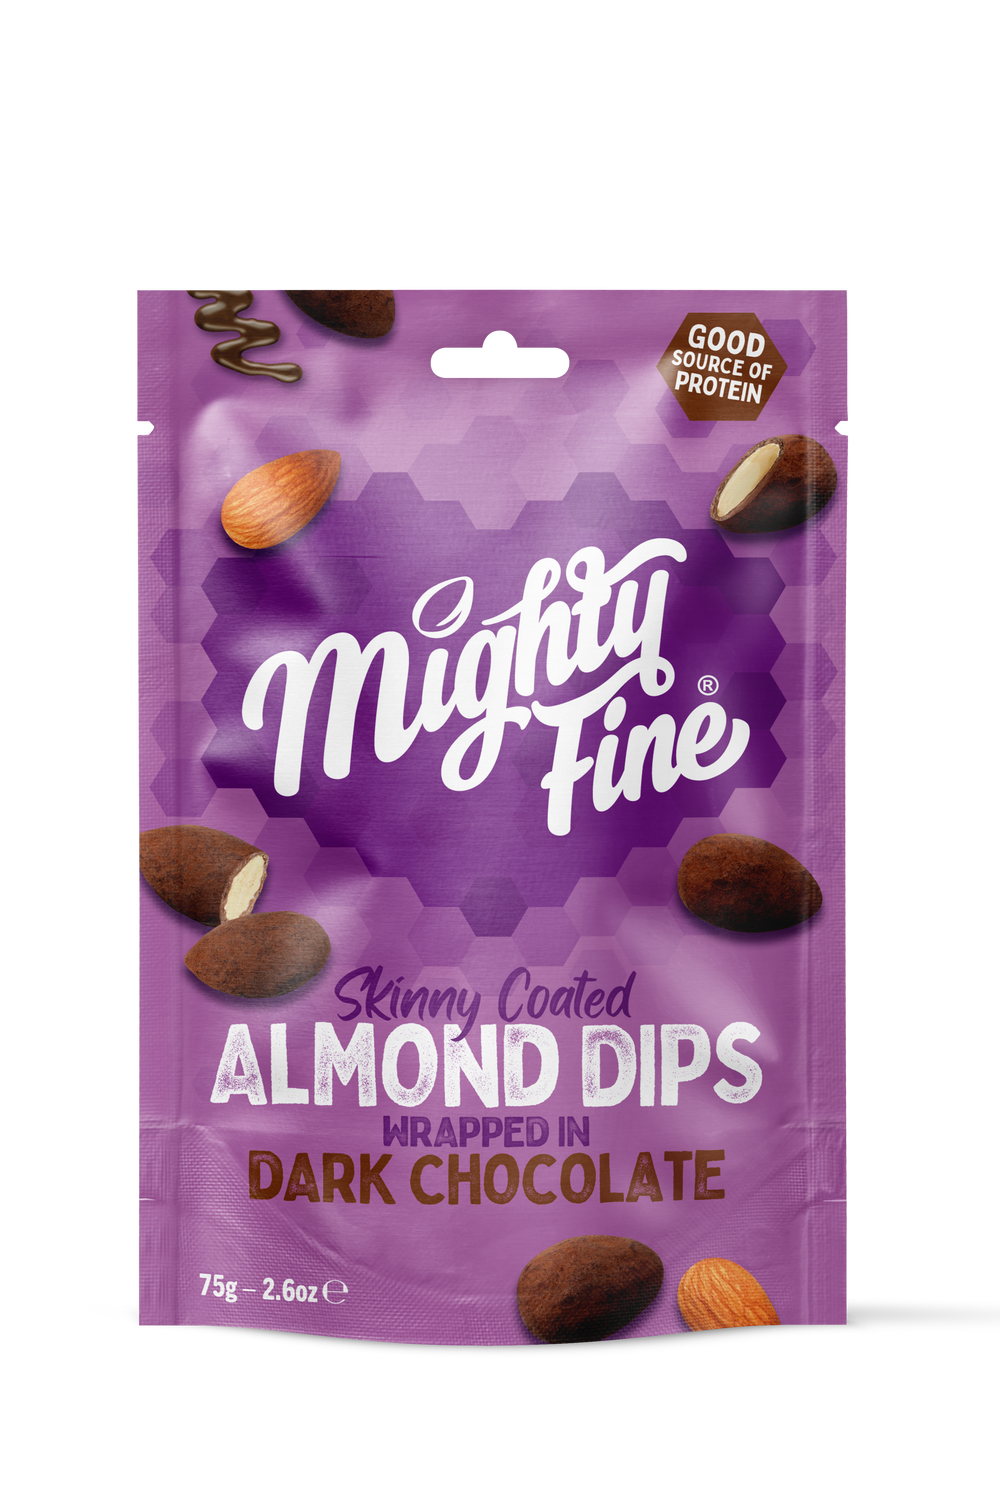 Dark Chocolate Almond Dips